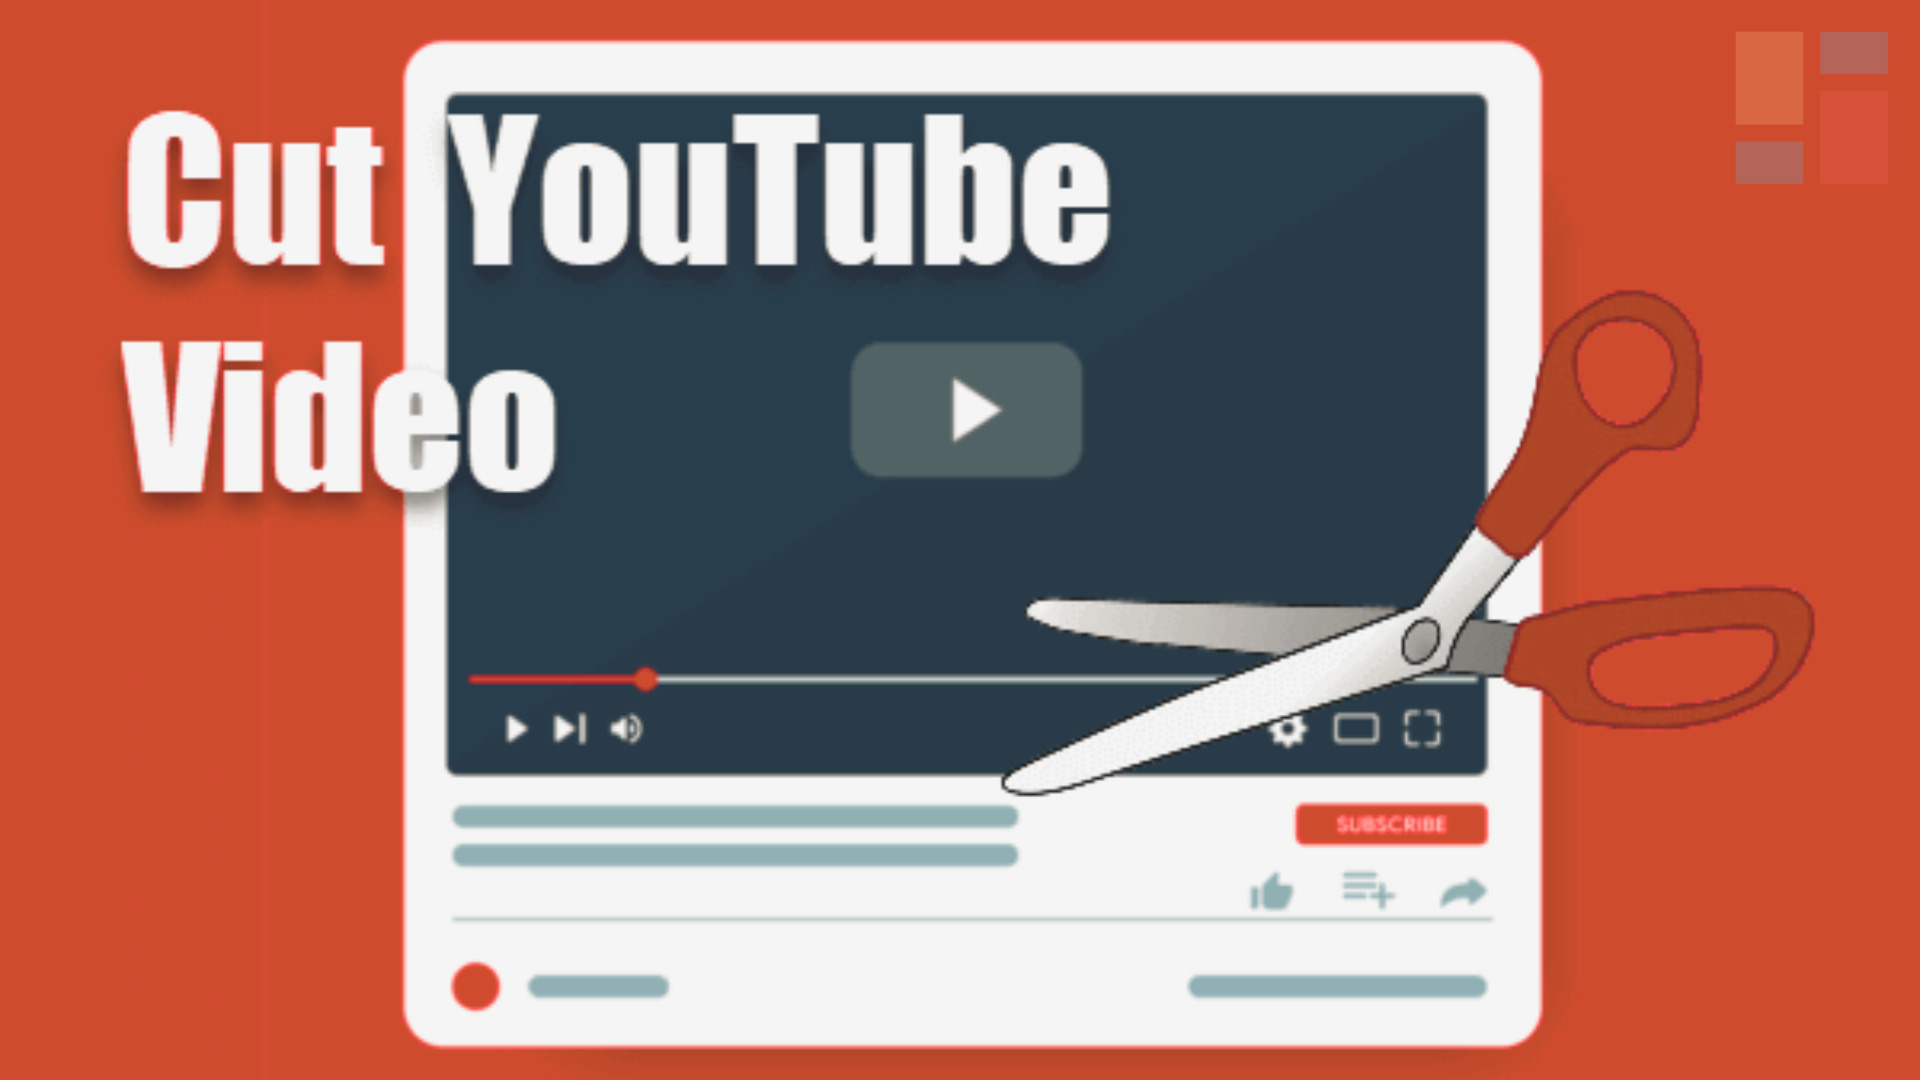 Cut Video Online Youtube